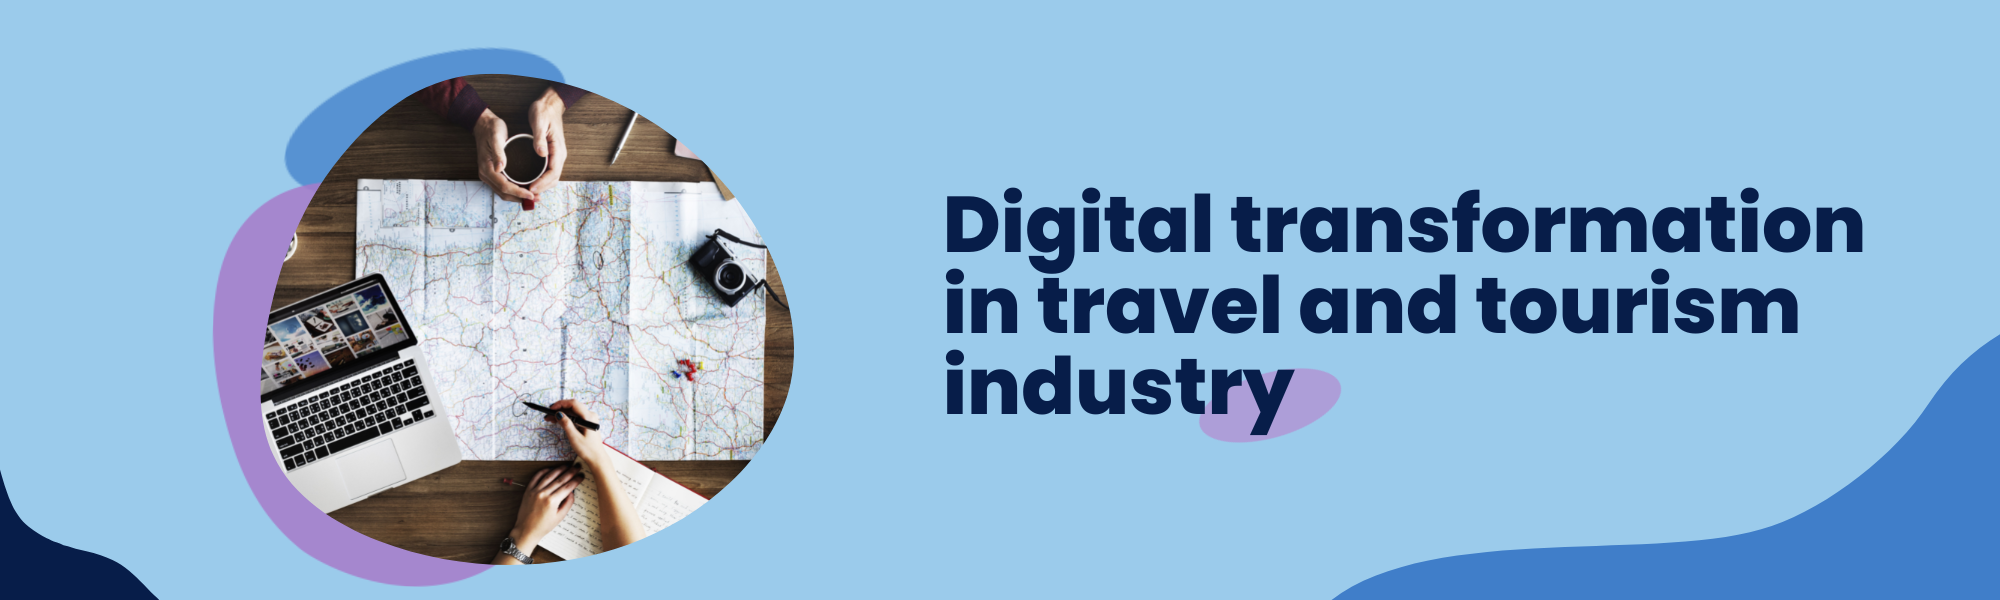 challenges in online travel industry